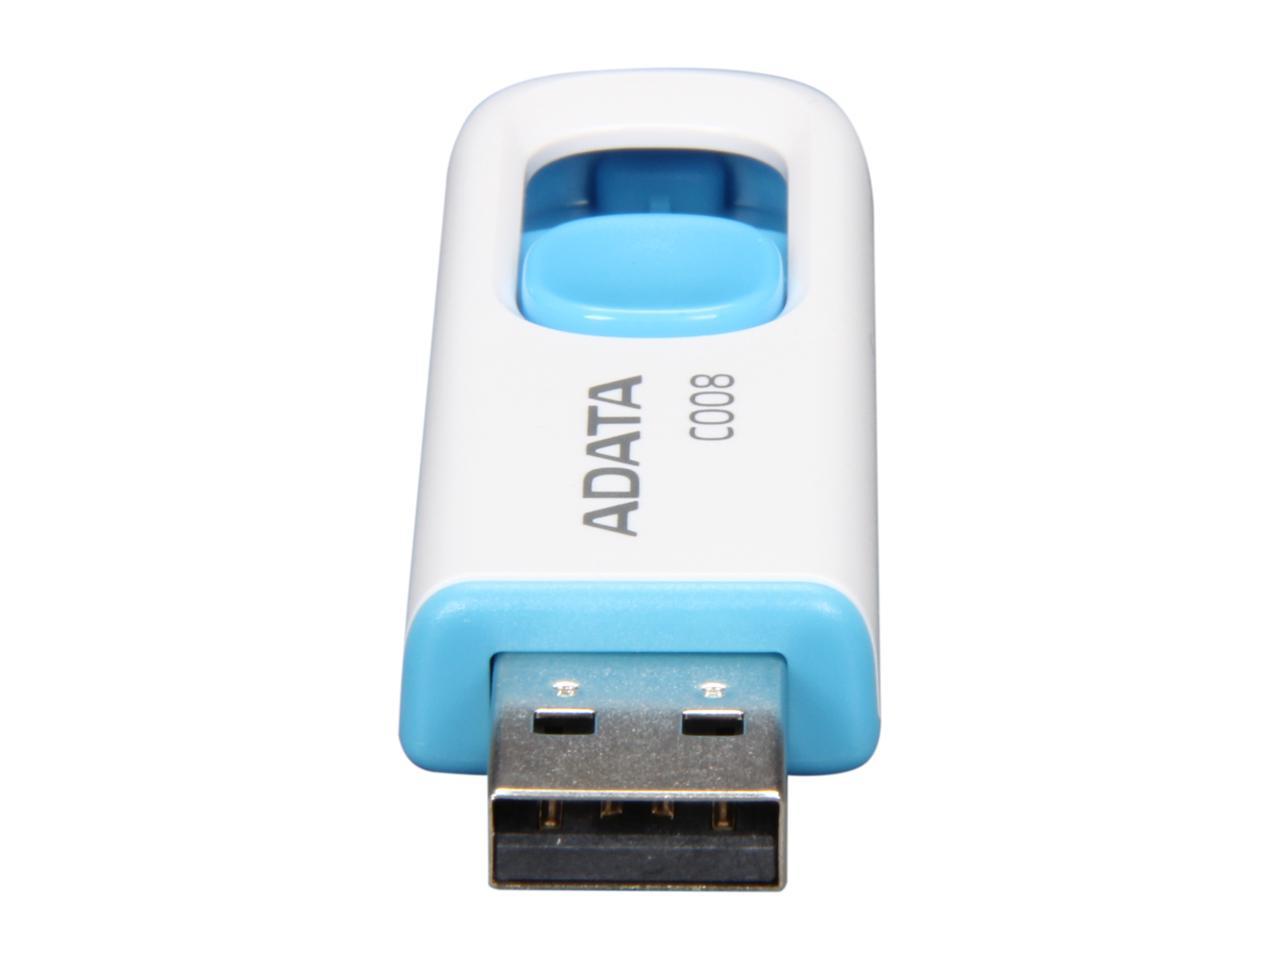 ADATA Classic Series C008 Retractable 64GB USB 2.0 Flash Drive (White and Blue) Model AC008-64G-RWE